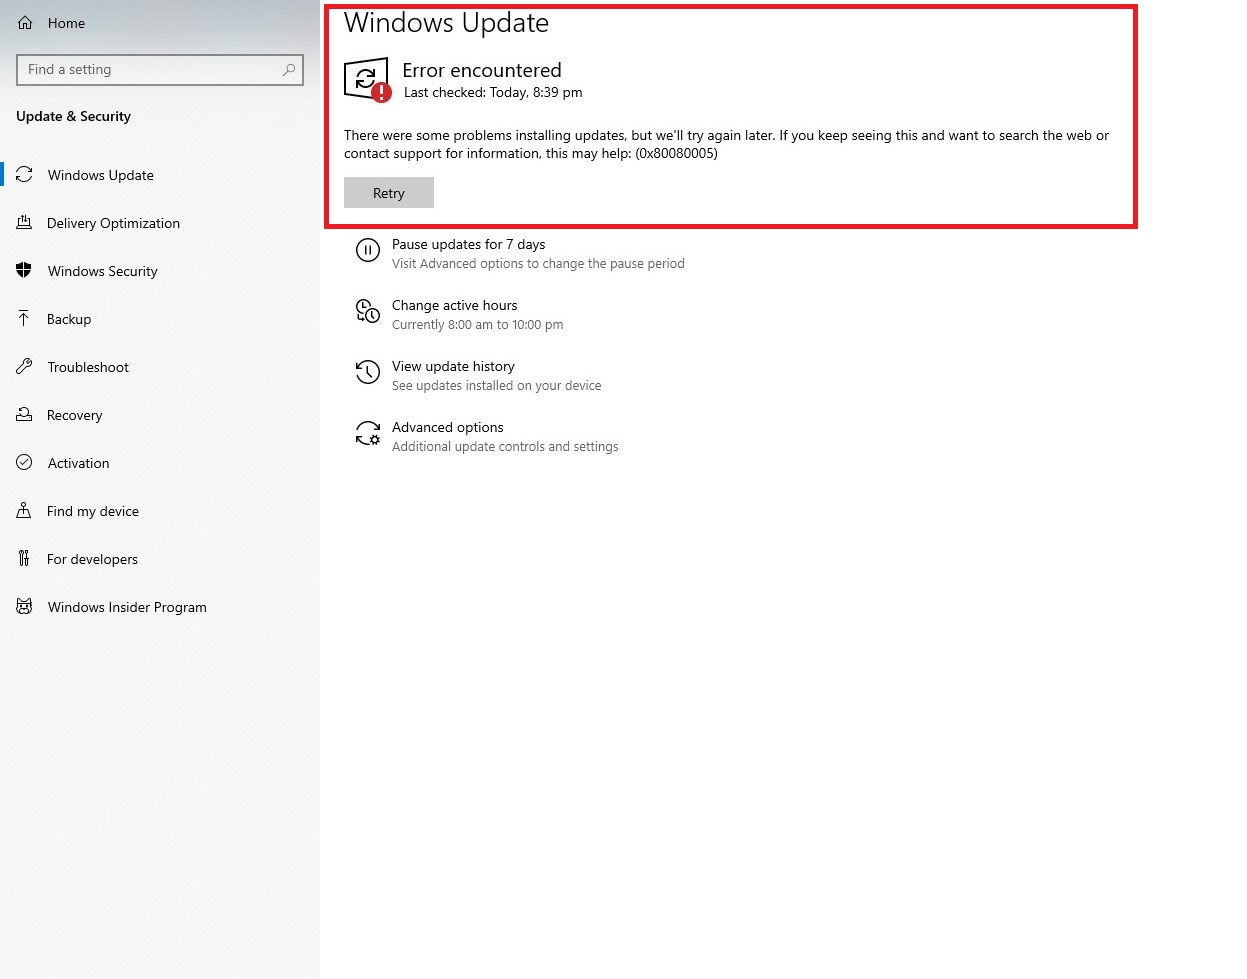 Windows 10 Pro Update Error 0x80080005 and "Windows Security" Options on Settings Won't Show 34638426-8ea9-4f04-be4b-5610e2a5a899?upload=true.jpg